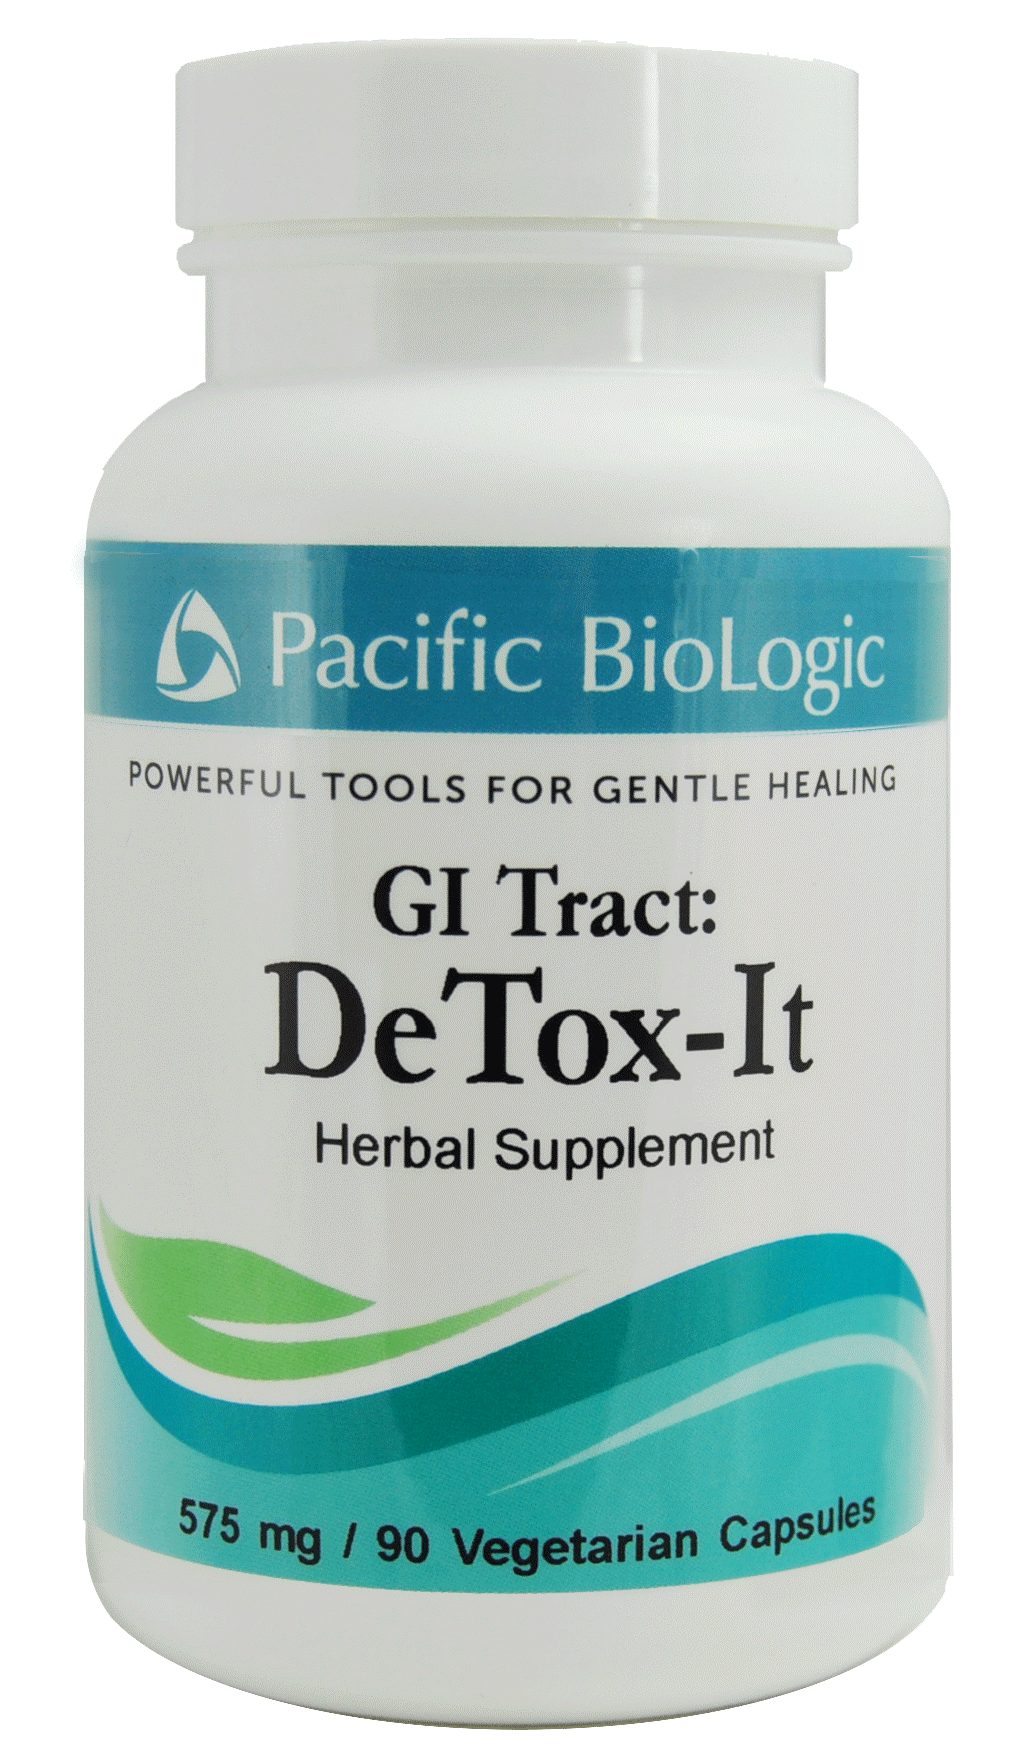 G.I. Tract : Detox It